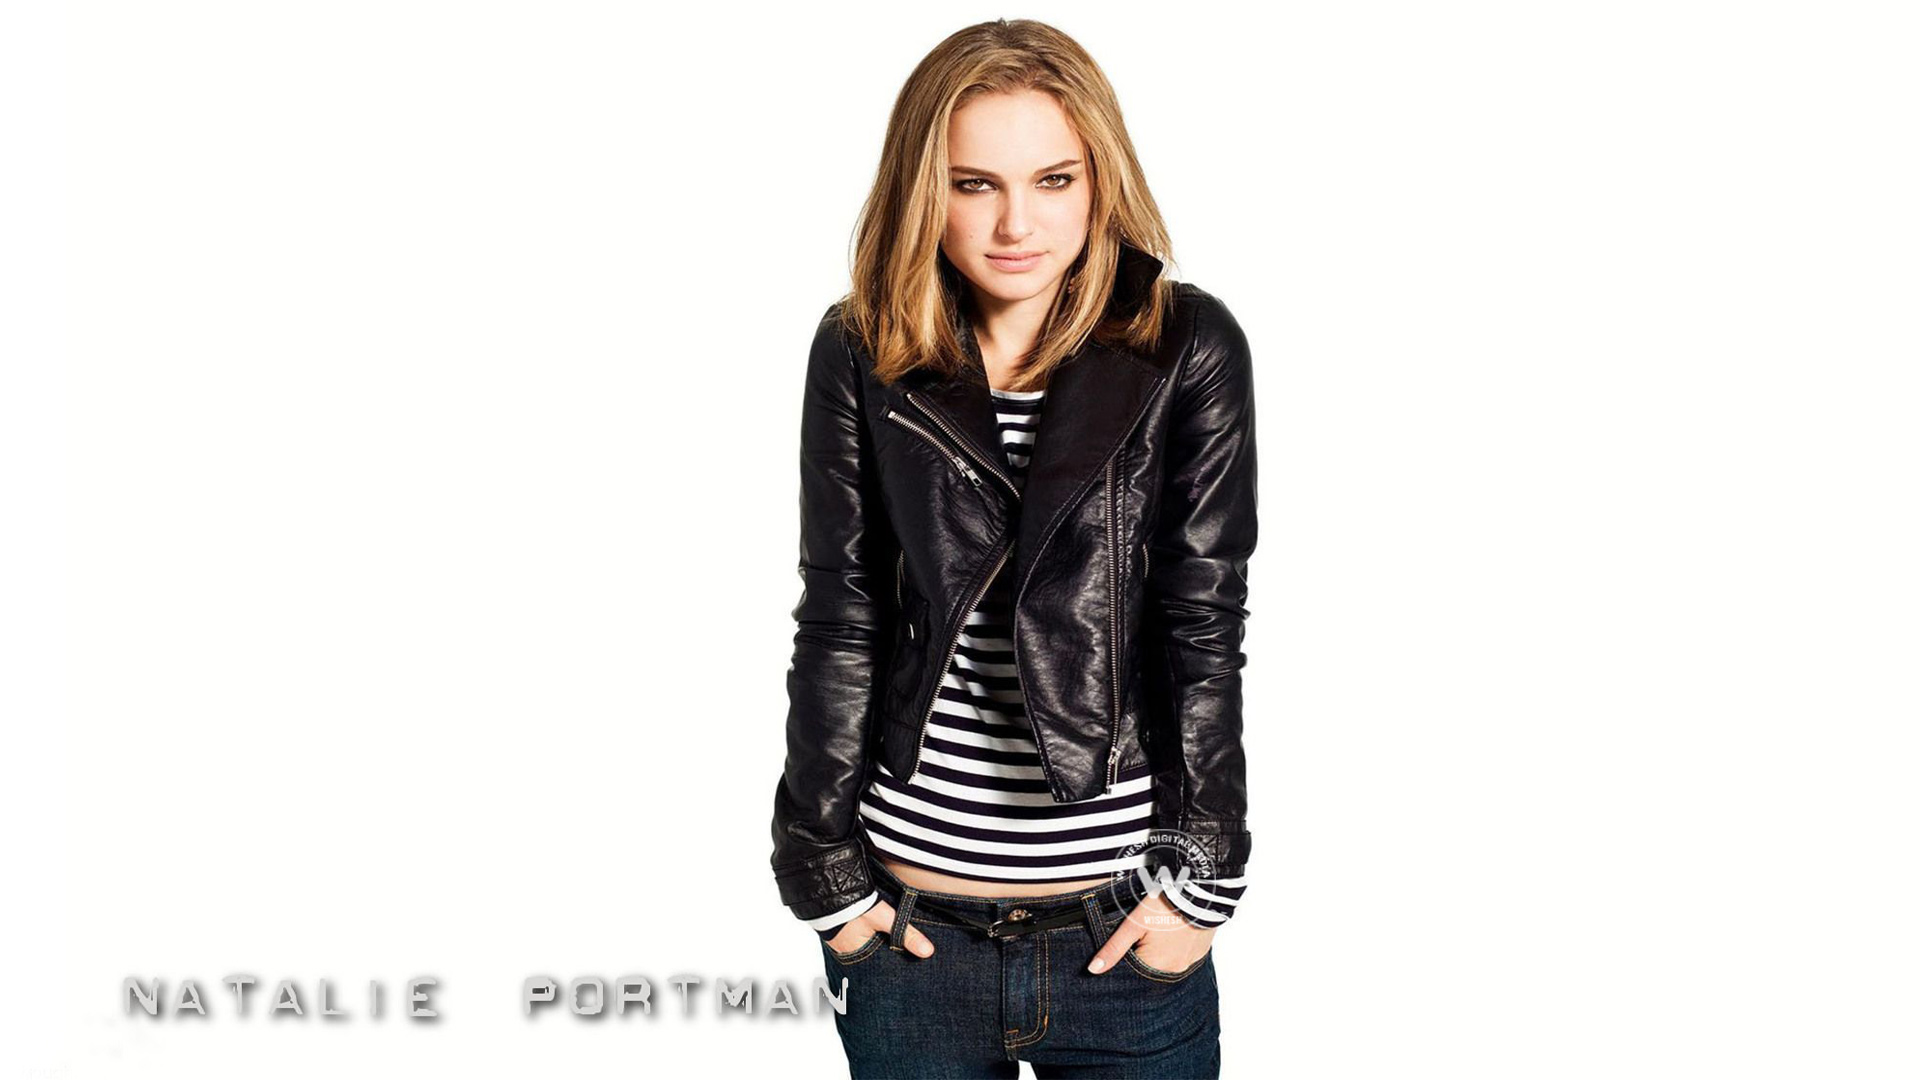 Wallpaper 12of 12 | Natalie Portman Latest Hot Wallpapers | latest gorgoeus images of actress natalie portman | actress natalie portman latest hot gallery